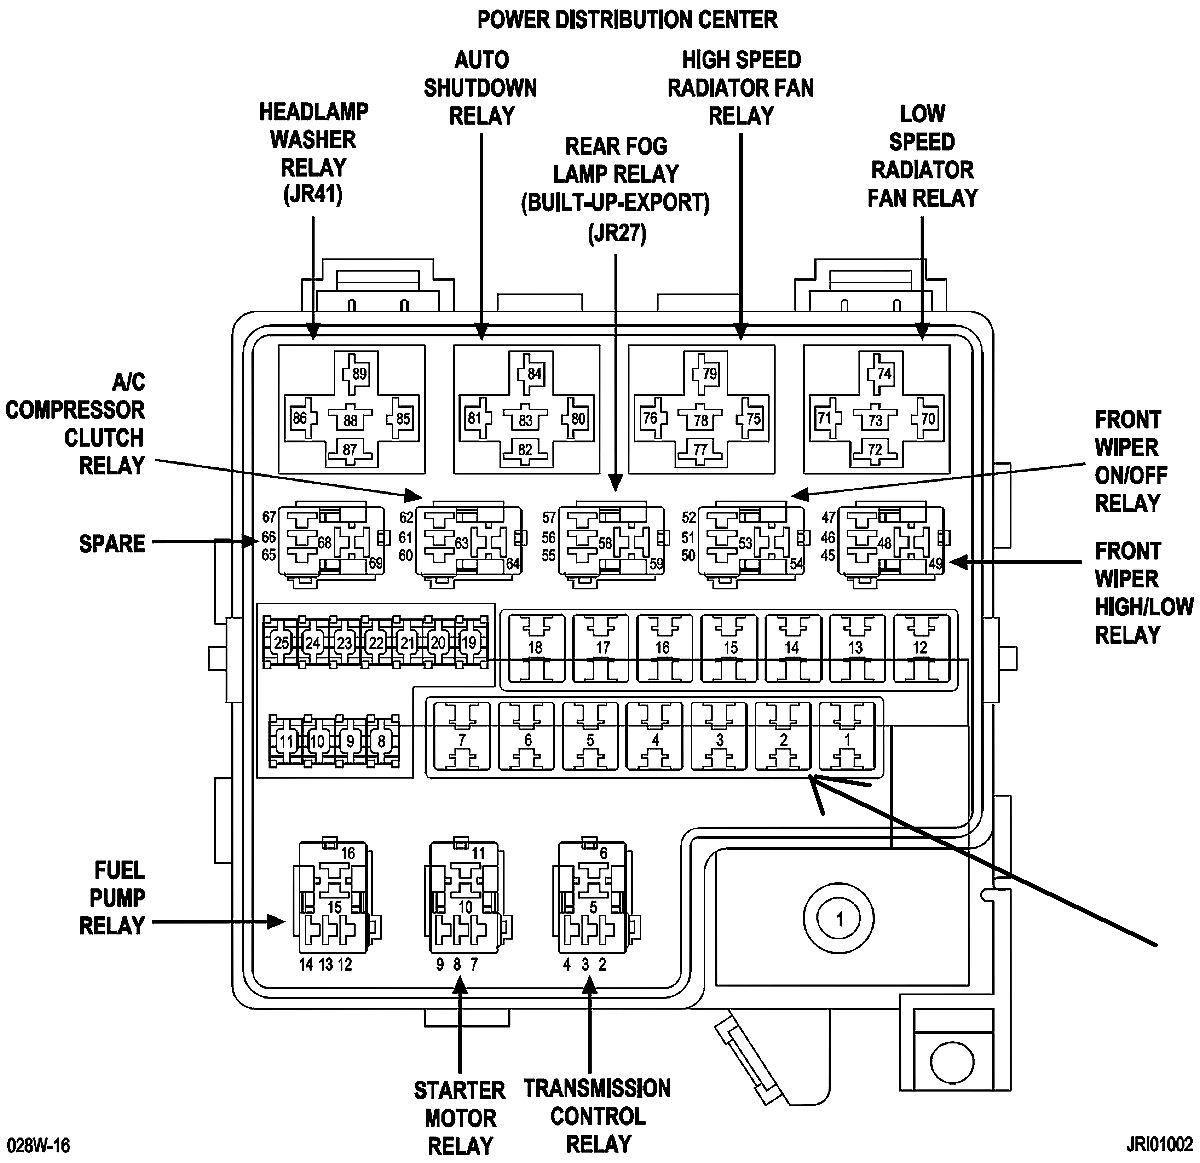 2008 Chrysler Sebring Fuse Box Diagram Dodge Sebring Fuse Panel Diagram Wiring Diagram Write